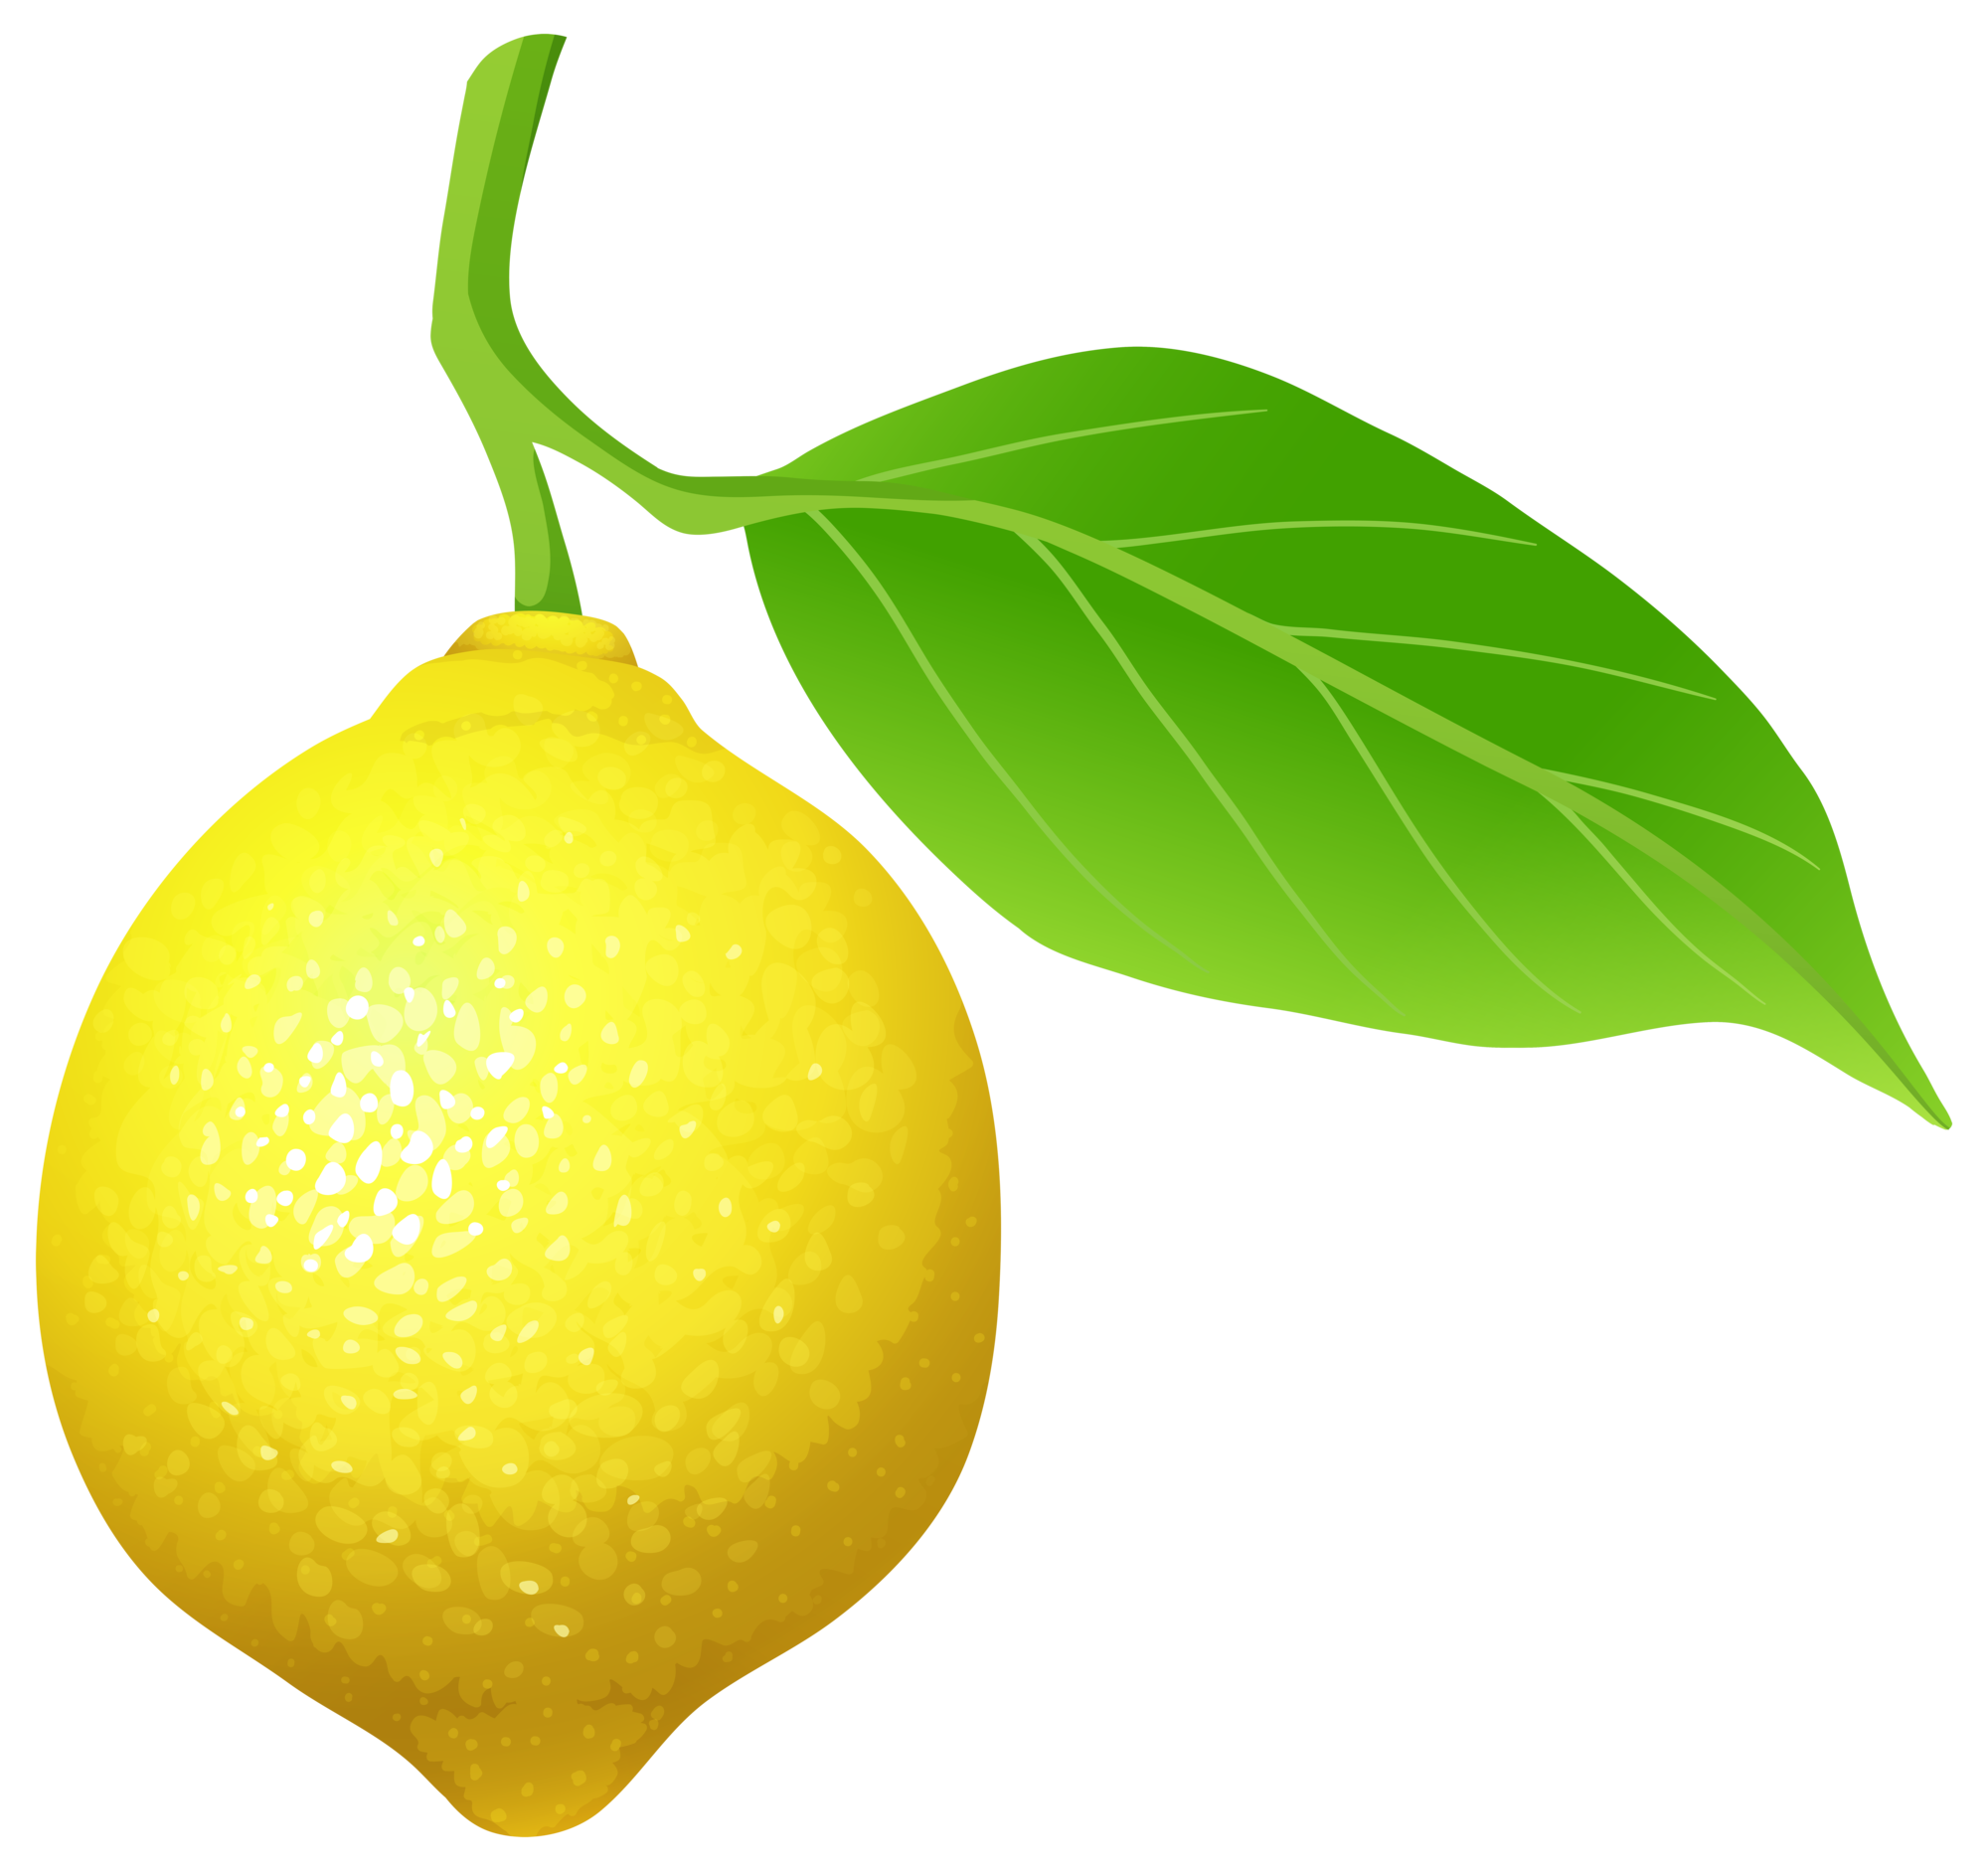 Free Printable Lemon Images - Printable Word Searches